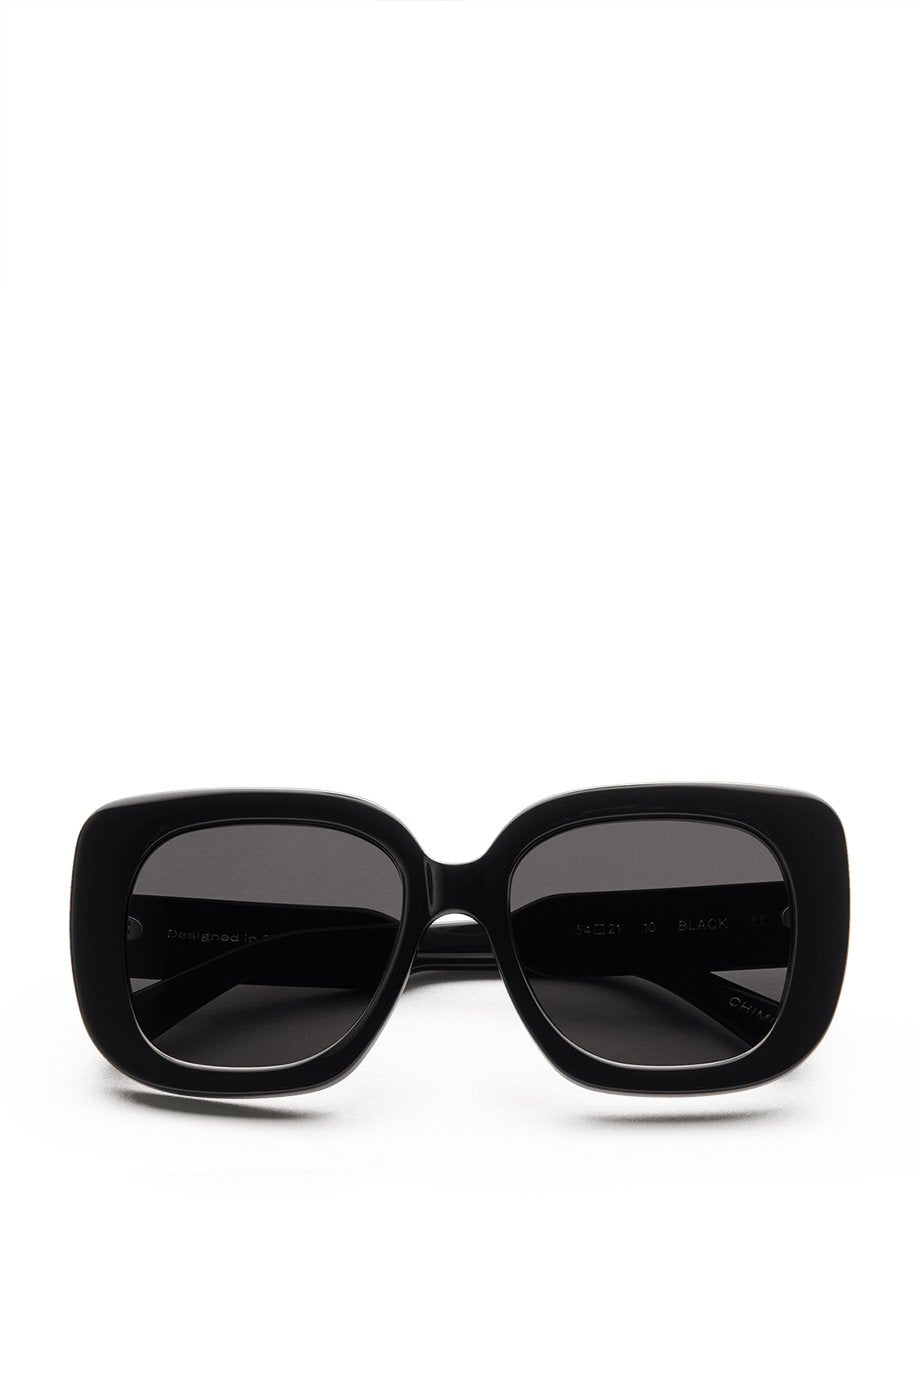 Chimi 10 Sunglasses - Black